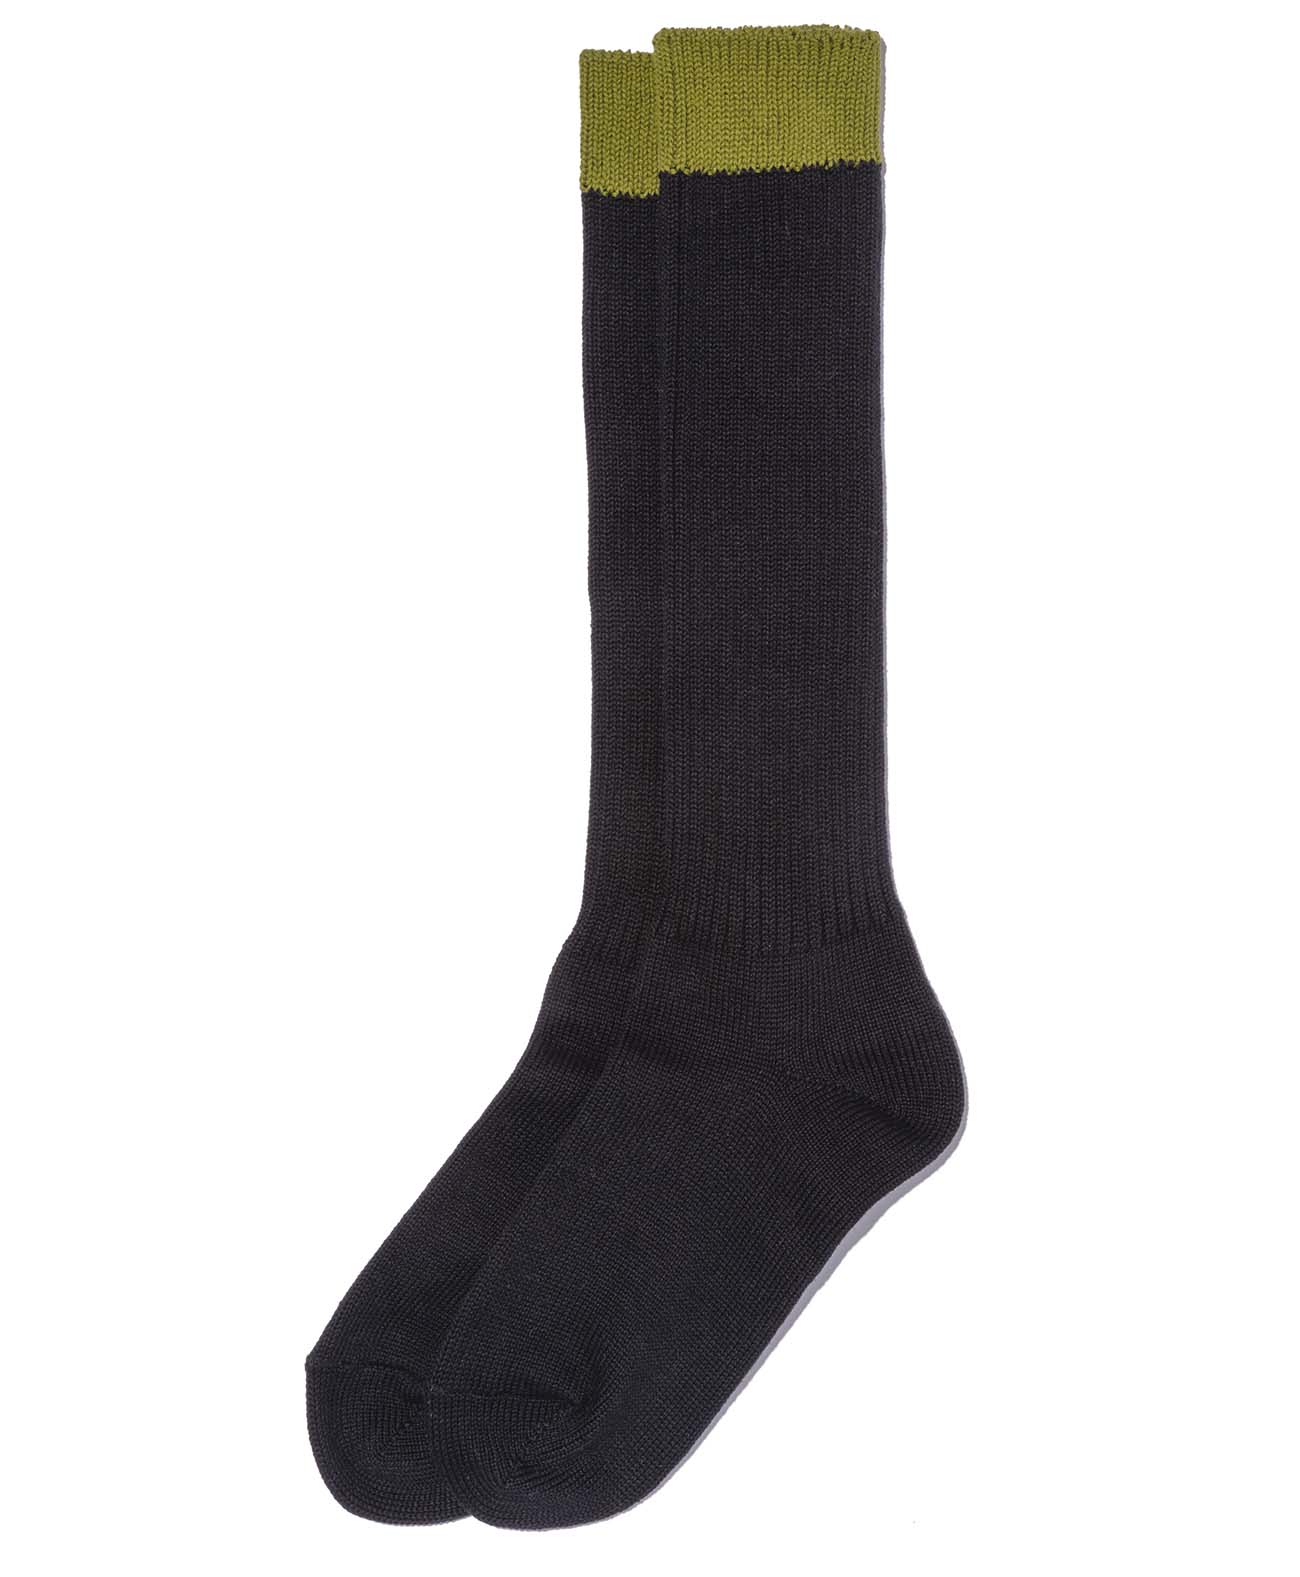 Boots Socks / Black / Khaki (Wanita)